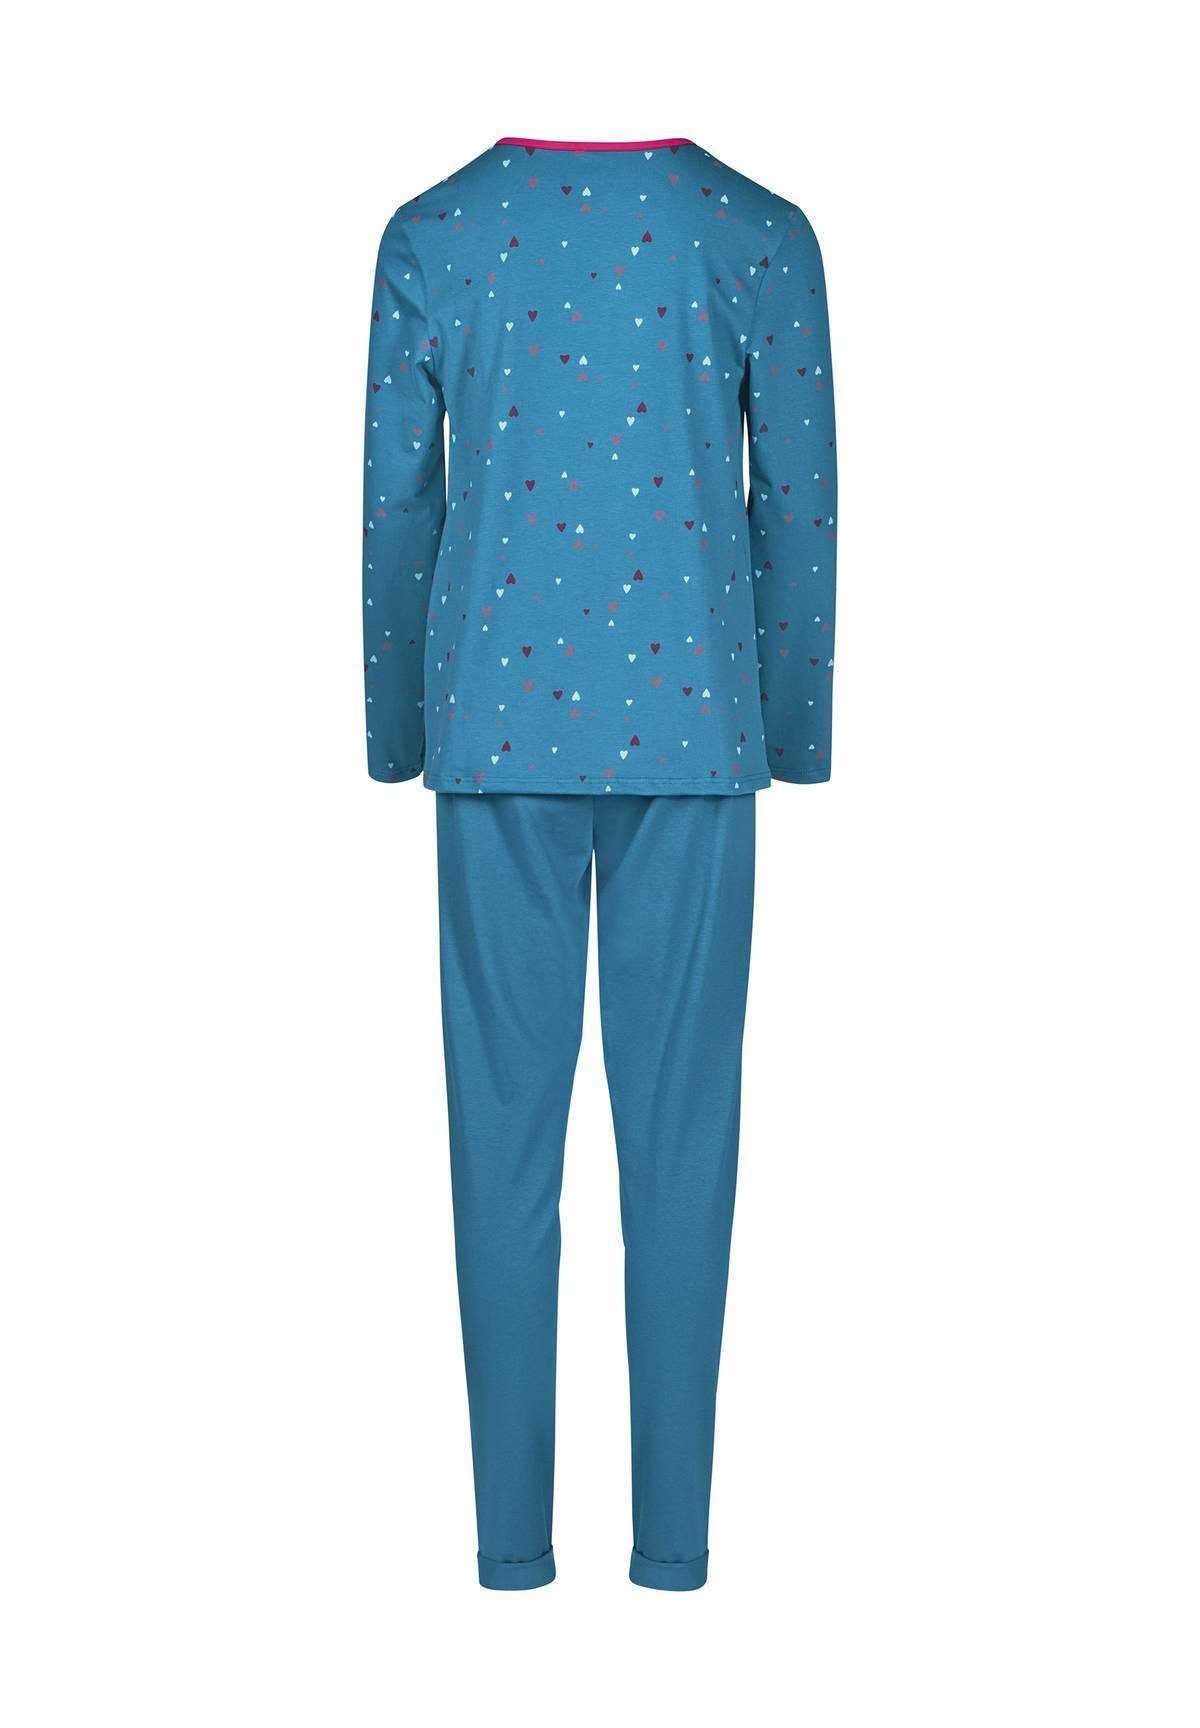 Blau Mädchen Set - 2-tlg. lang, Pyjama Skiny Kinder, Schlafanzug